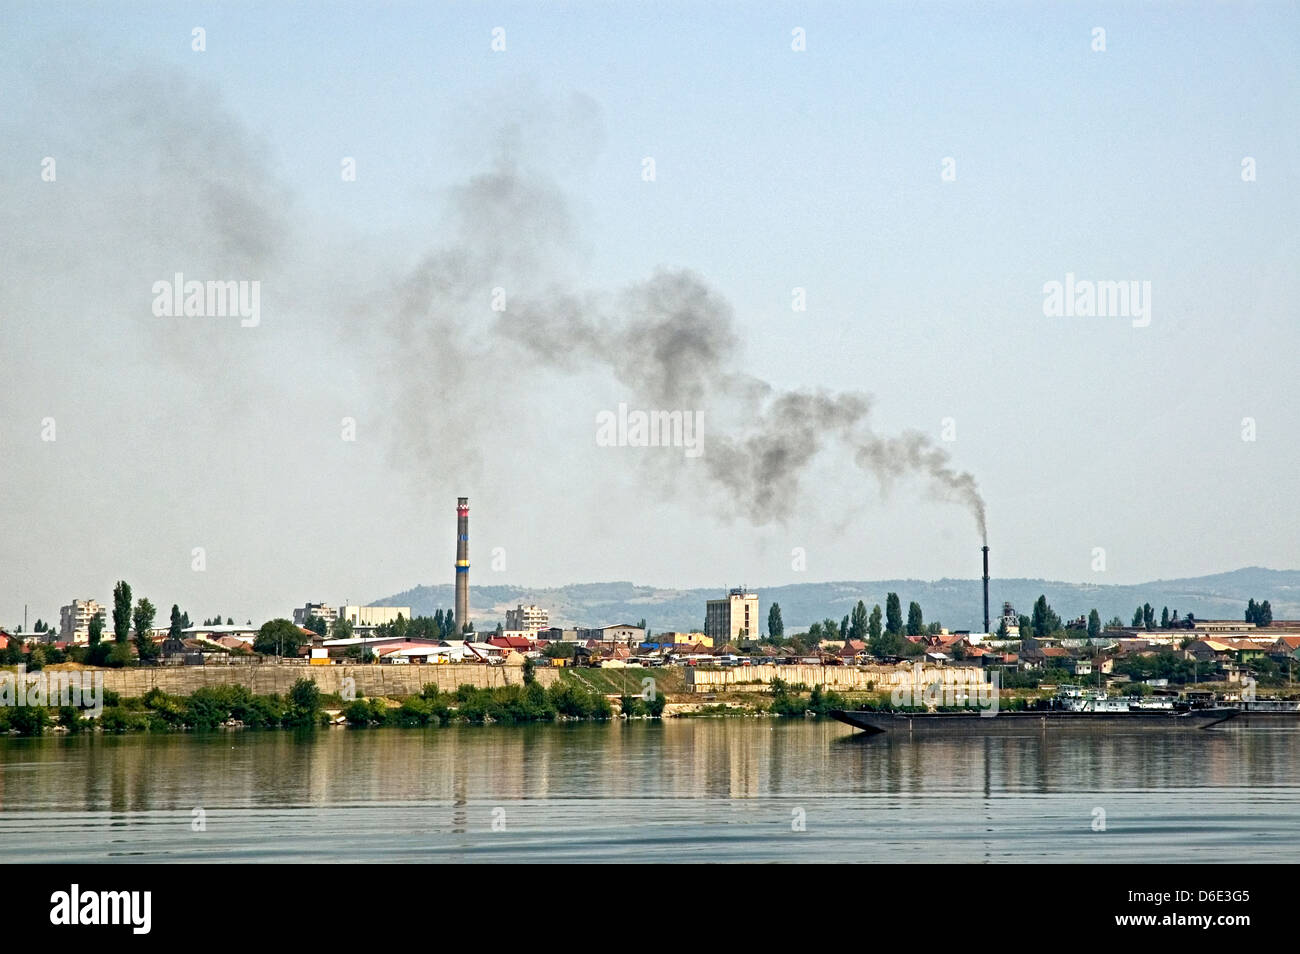 EUROPE, ROMANIA, Ostrovul Simian, chimney emitting black pollution fumes Stock Photo